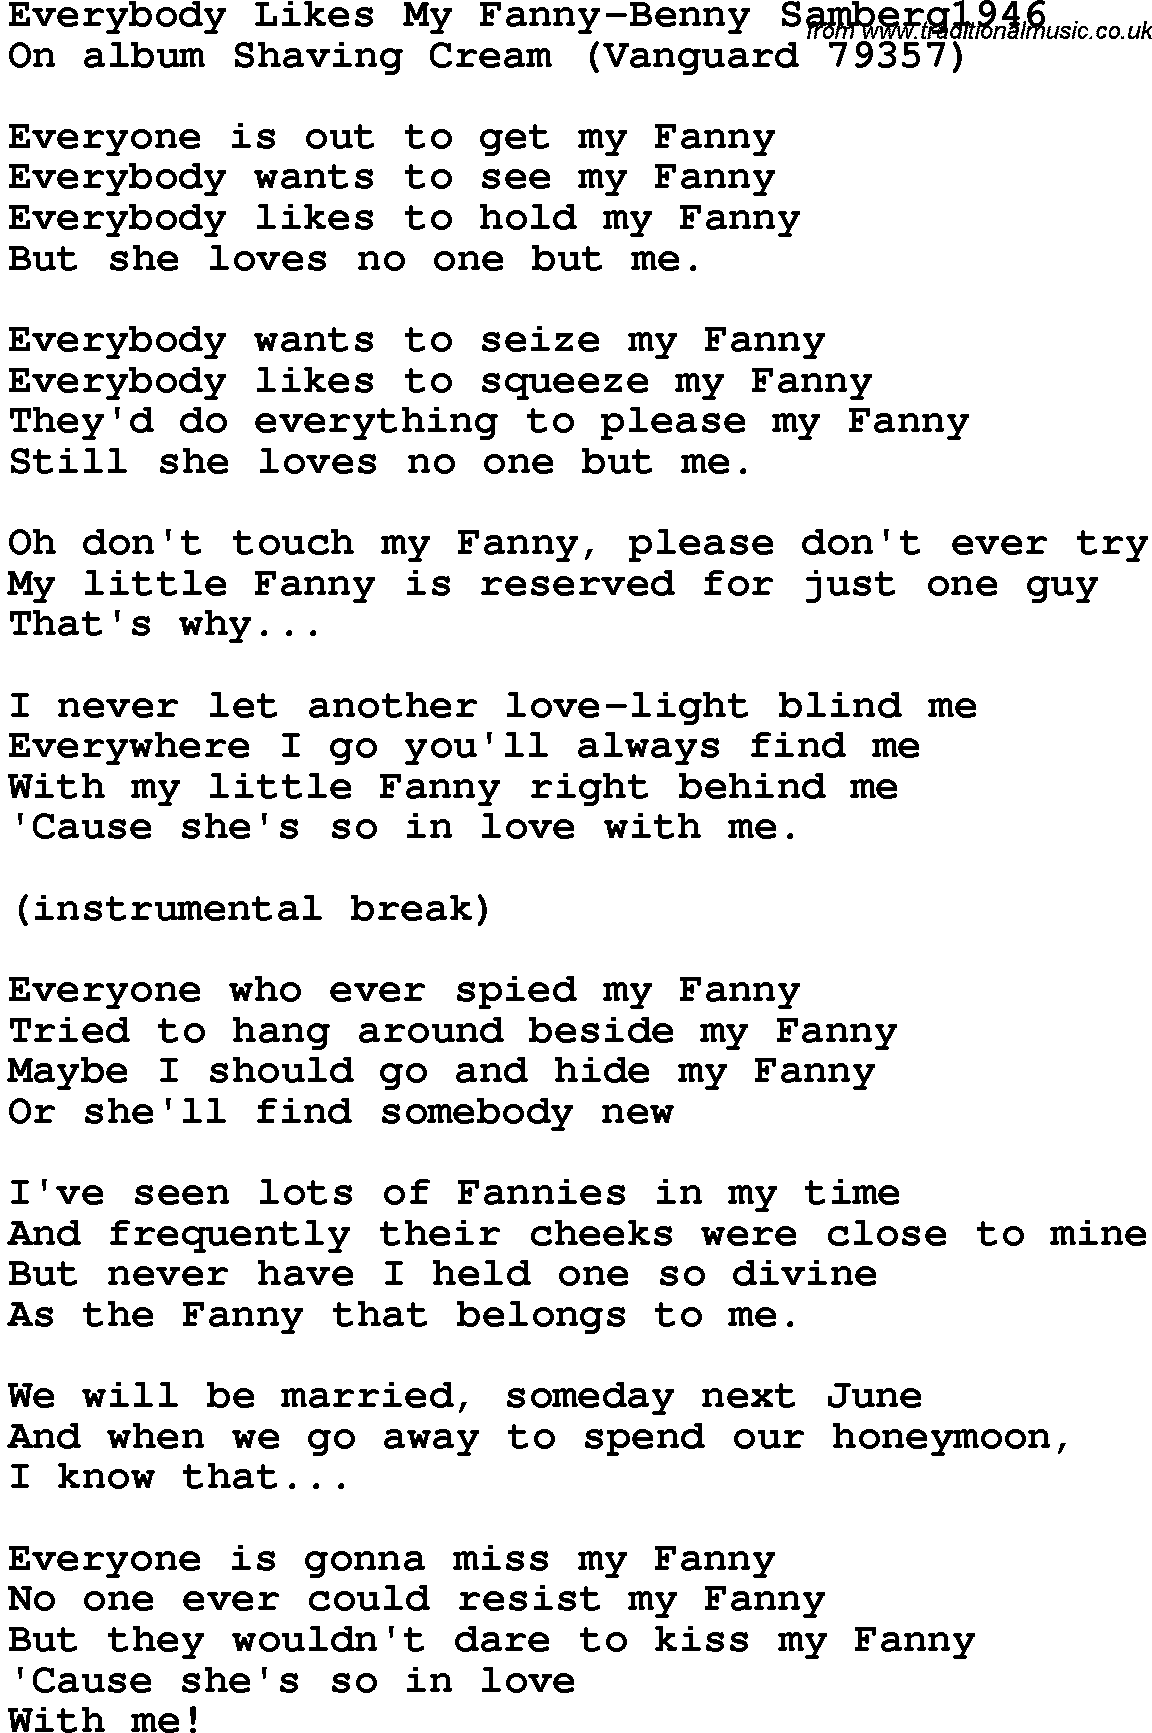 Novelty song: Everybody Likes My Fanny-Benny Samberg1946 lyrics